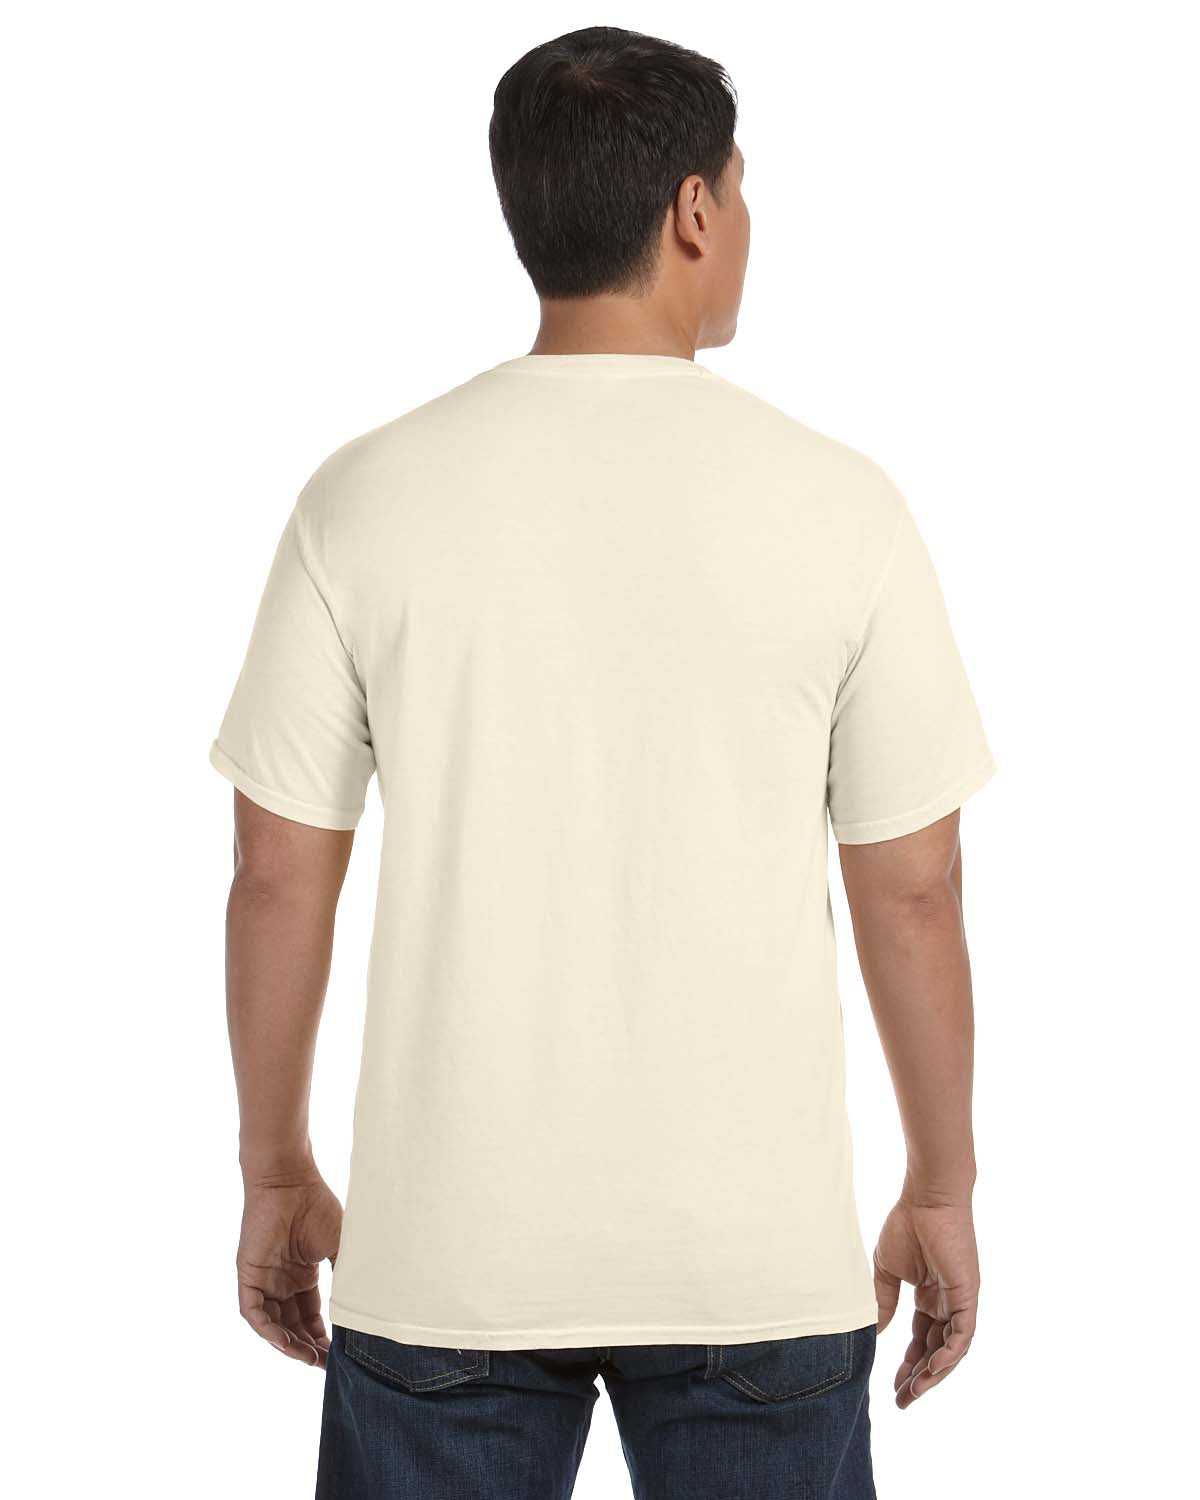 Bayside 5910 USA-Made Heavyweight Ringspun T-Shirt - Cream